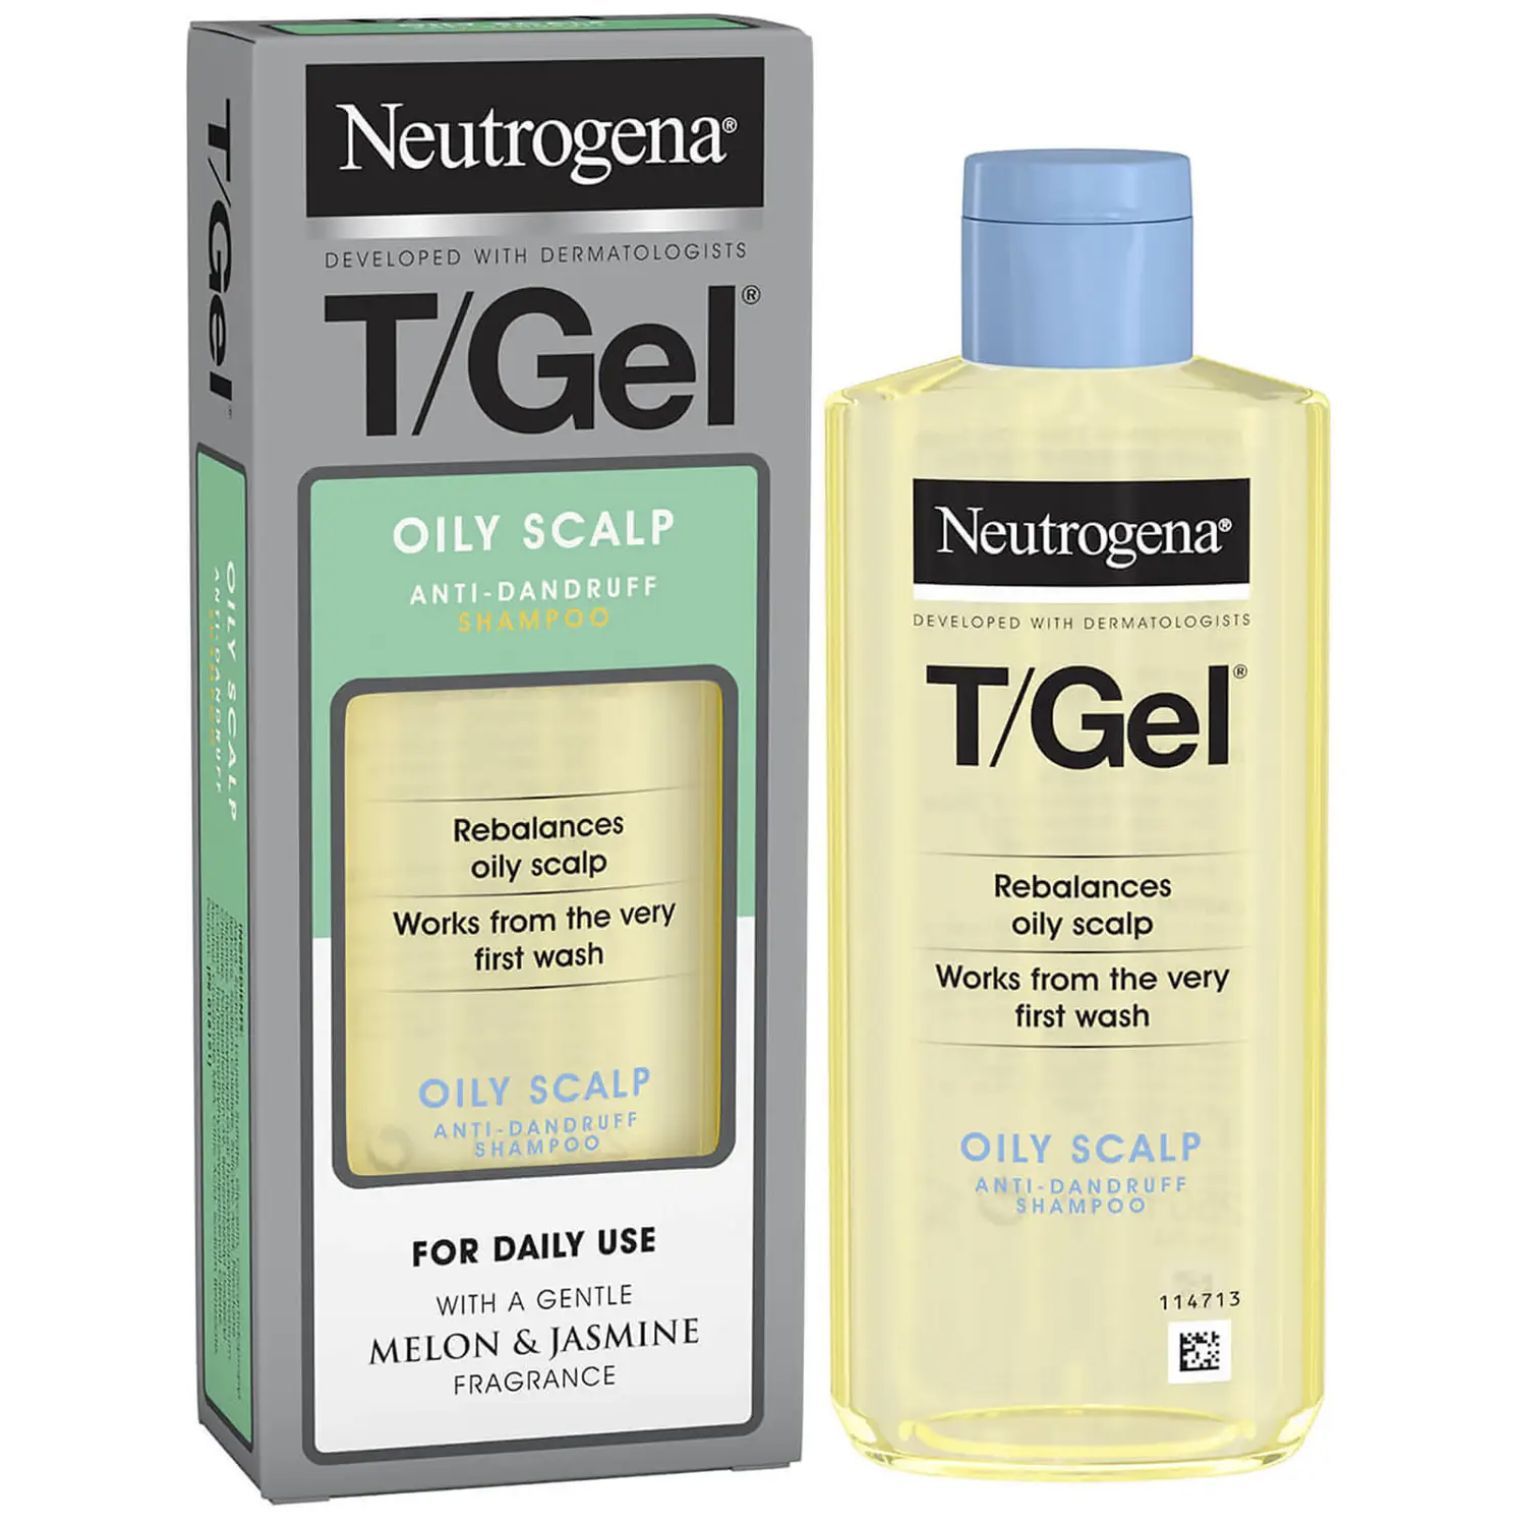 Neutrogena, t/Gel. Oily Scalp. Neutrogena t Gel купить. Neutrogena t/Gel шампунь аналоги дешевле.